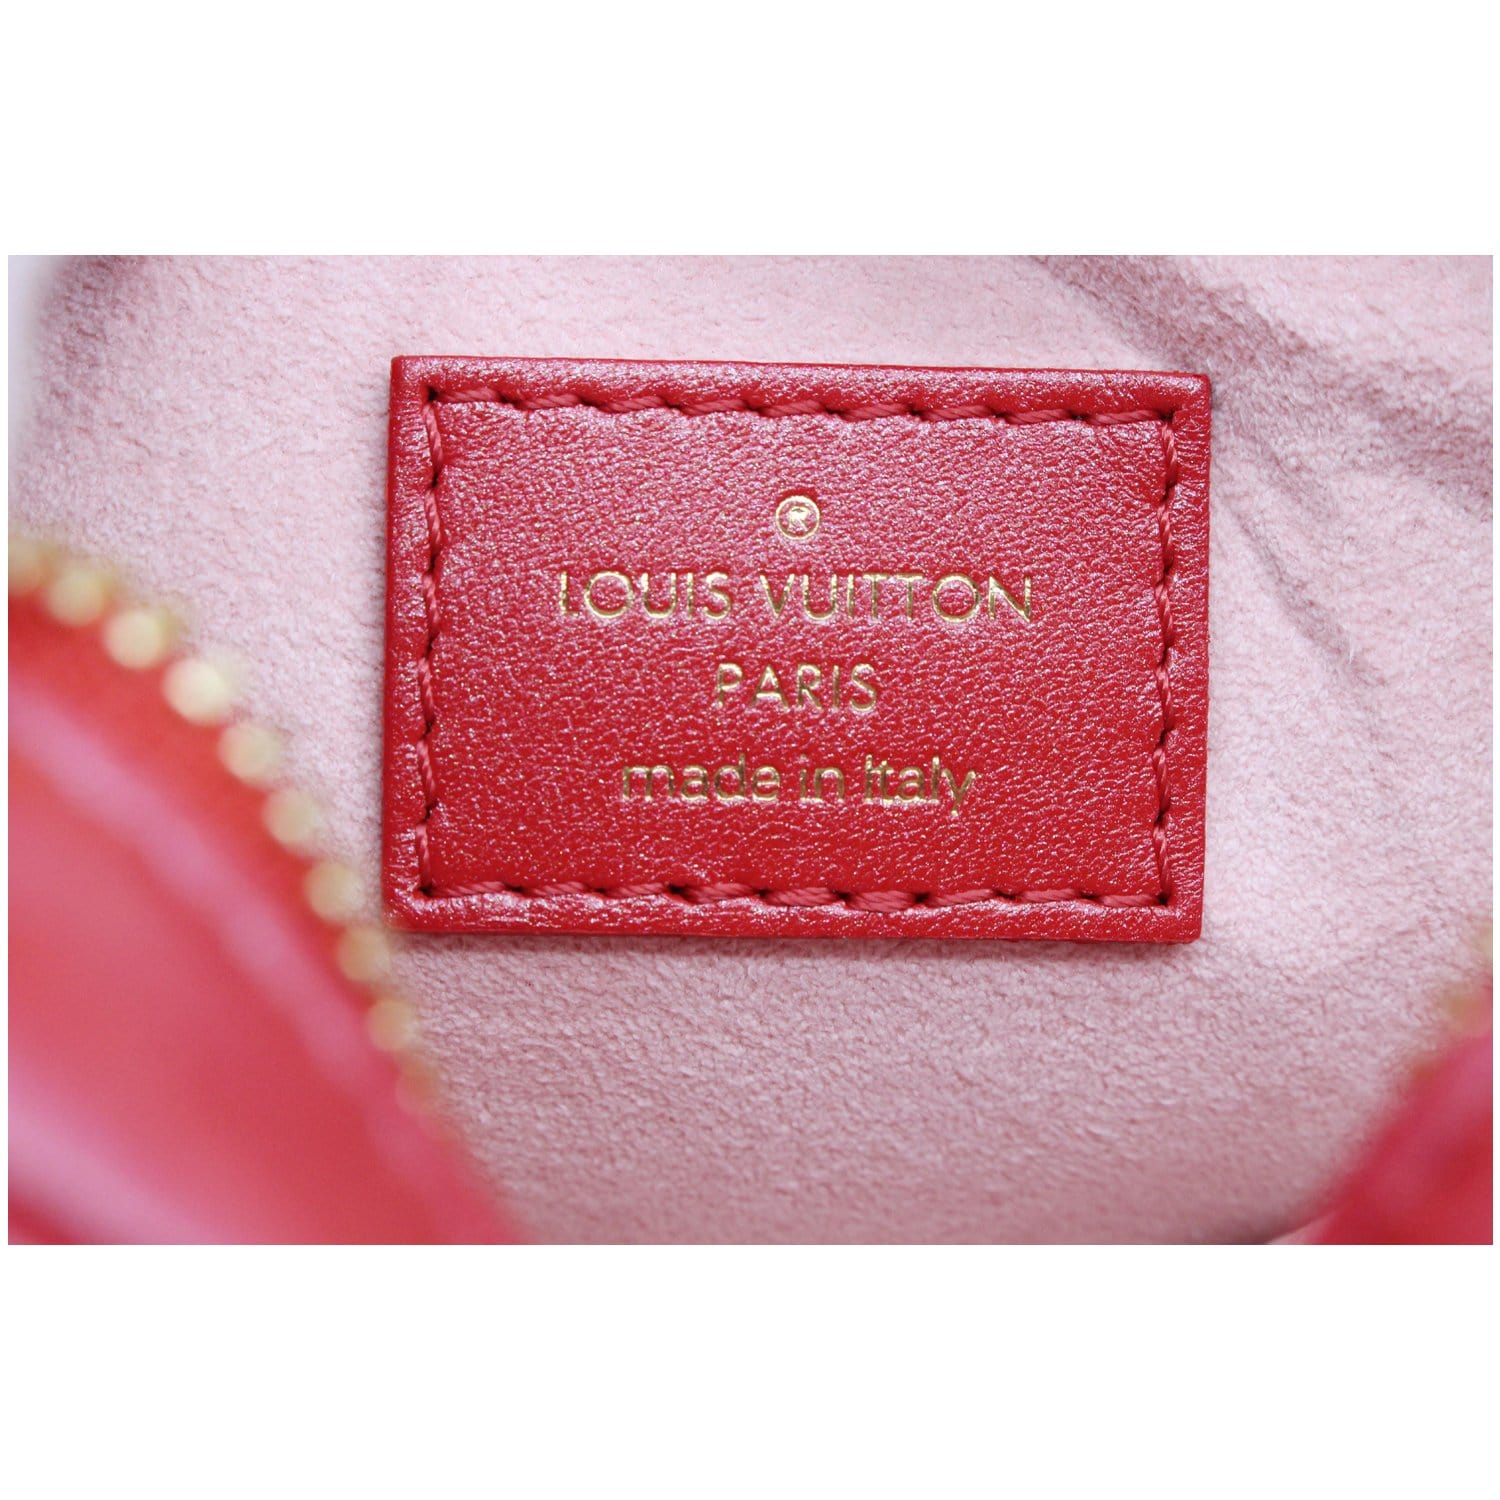 louis vuitton crossbody purses for women clearance sale